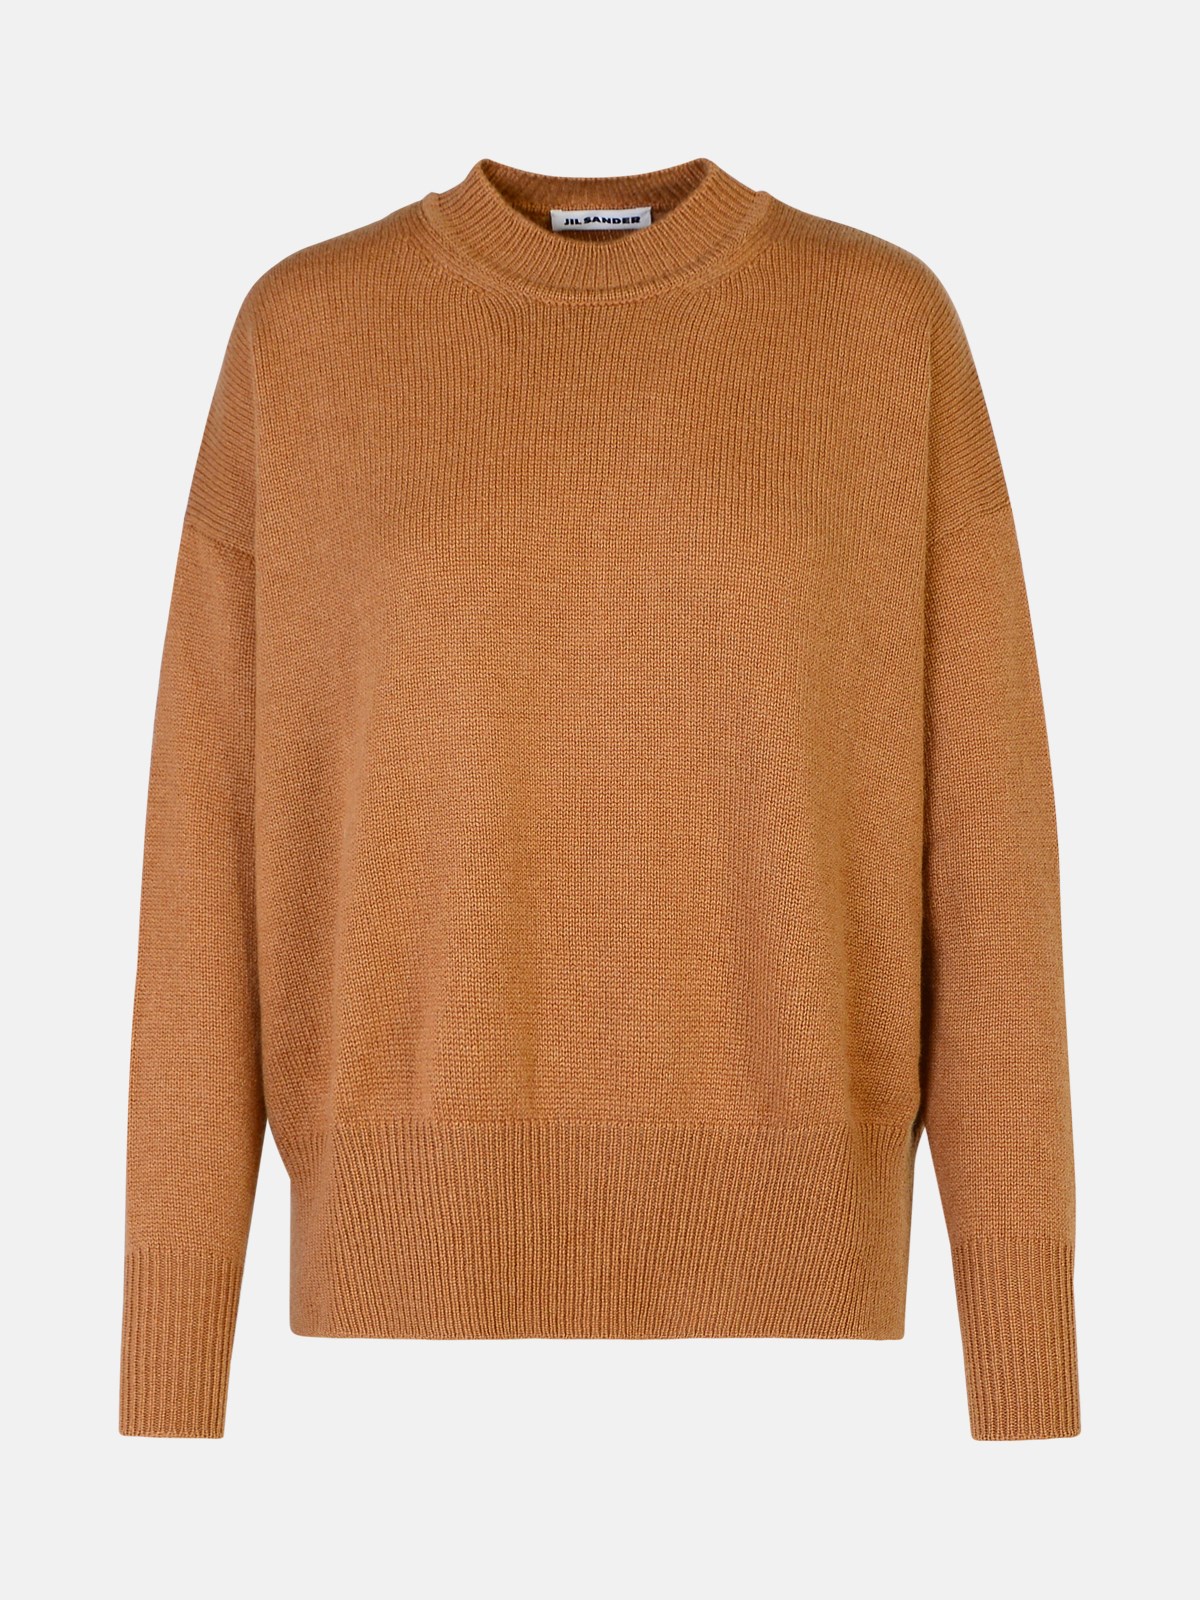 Shop Jil Sander Brown Cashmere Sweater